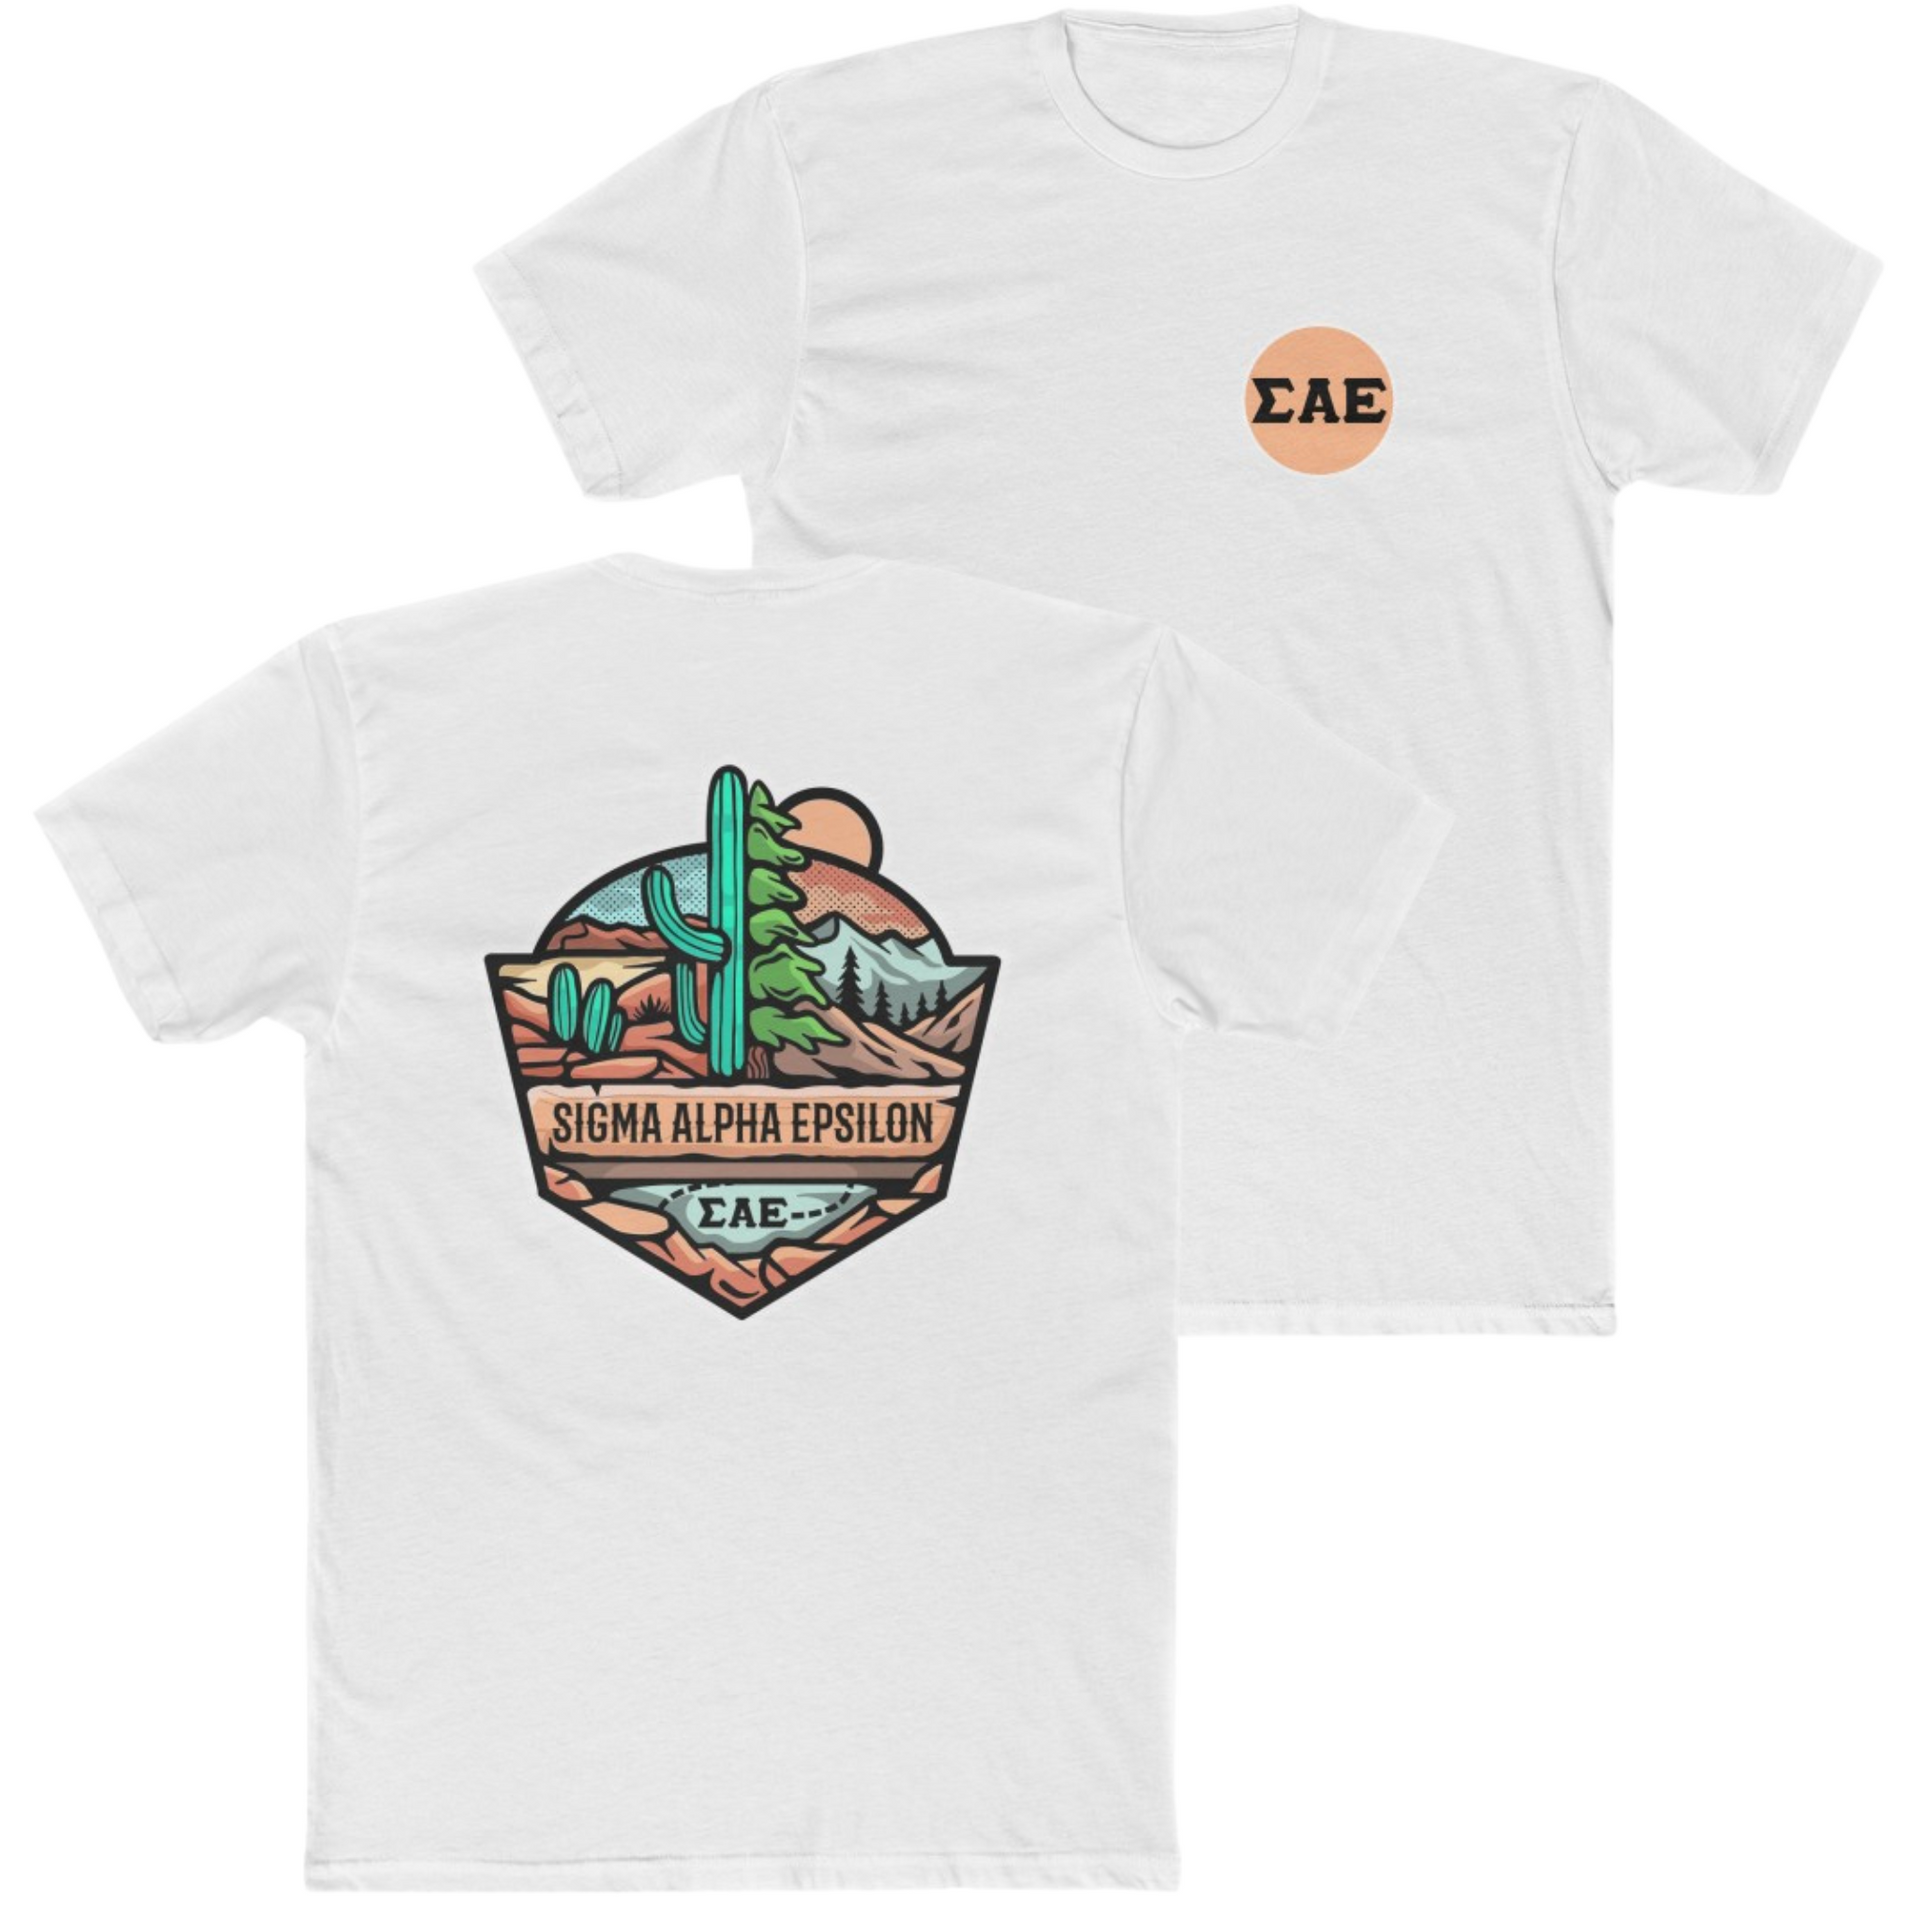 White Sigma Alpha Epsilon Graphic T-Shirt | Desert Mountains | Sigma Alpha Epsilon Clothing and Merchandise 